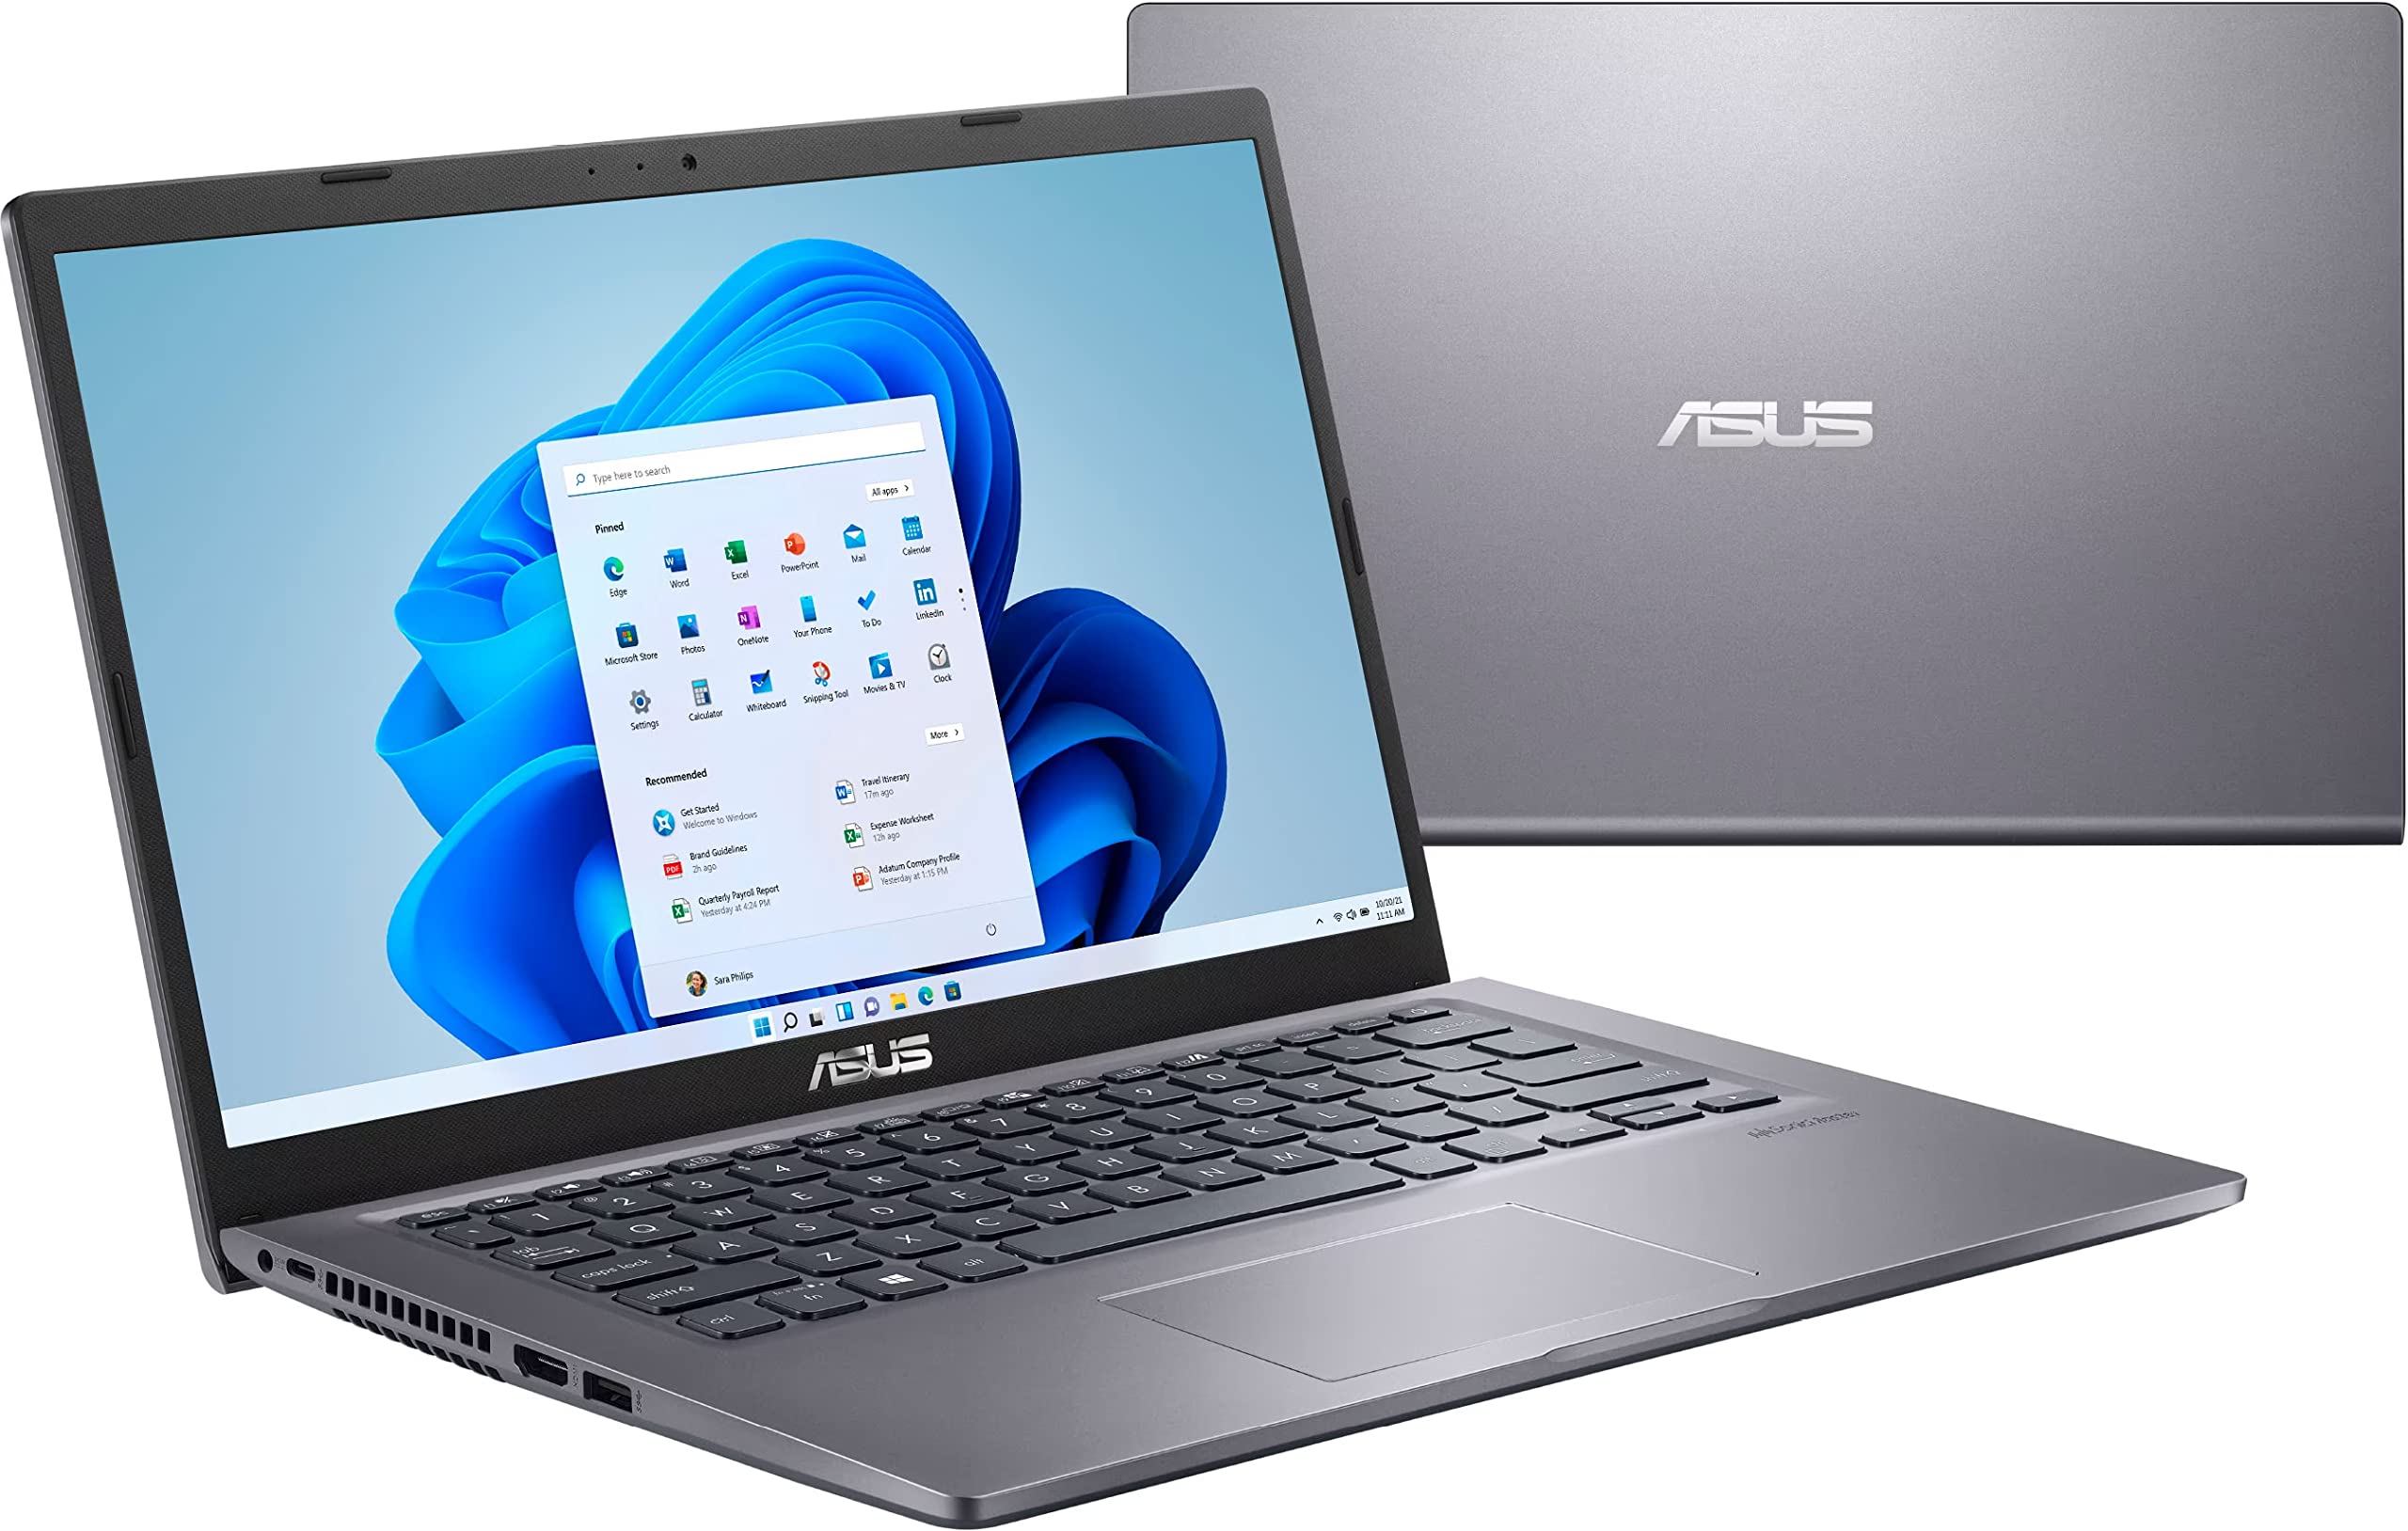 2022 Newest ASUS Vivobook 14 Thin and Light Laptop 14.0" 60Hz HD LED Backlit Display (AMD Ryzen 3 3250U 2-Core, 8GB RAM, 128GB SSD, AMD Radeon, WiFi 5, BT 5, Webcam, Win 11 Home S-Mode) with Hub